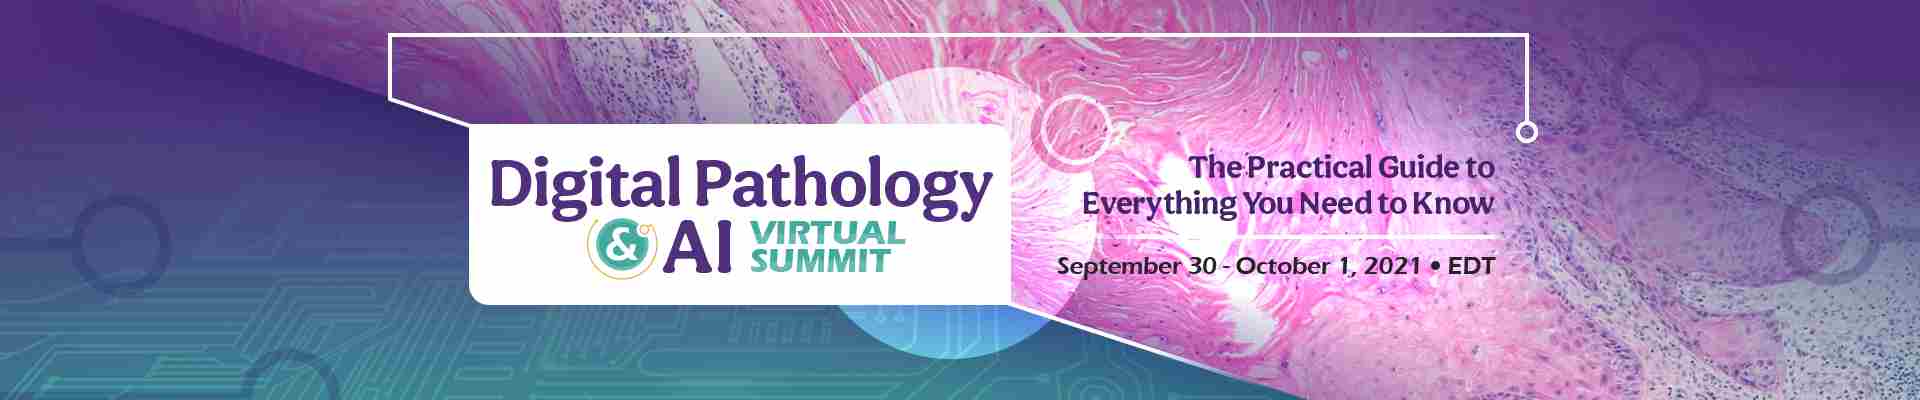 Digital Pathology & AI Virtual Summit 2021